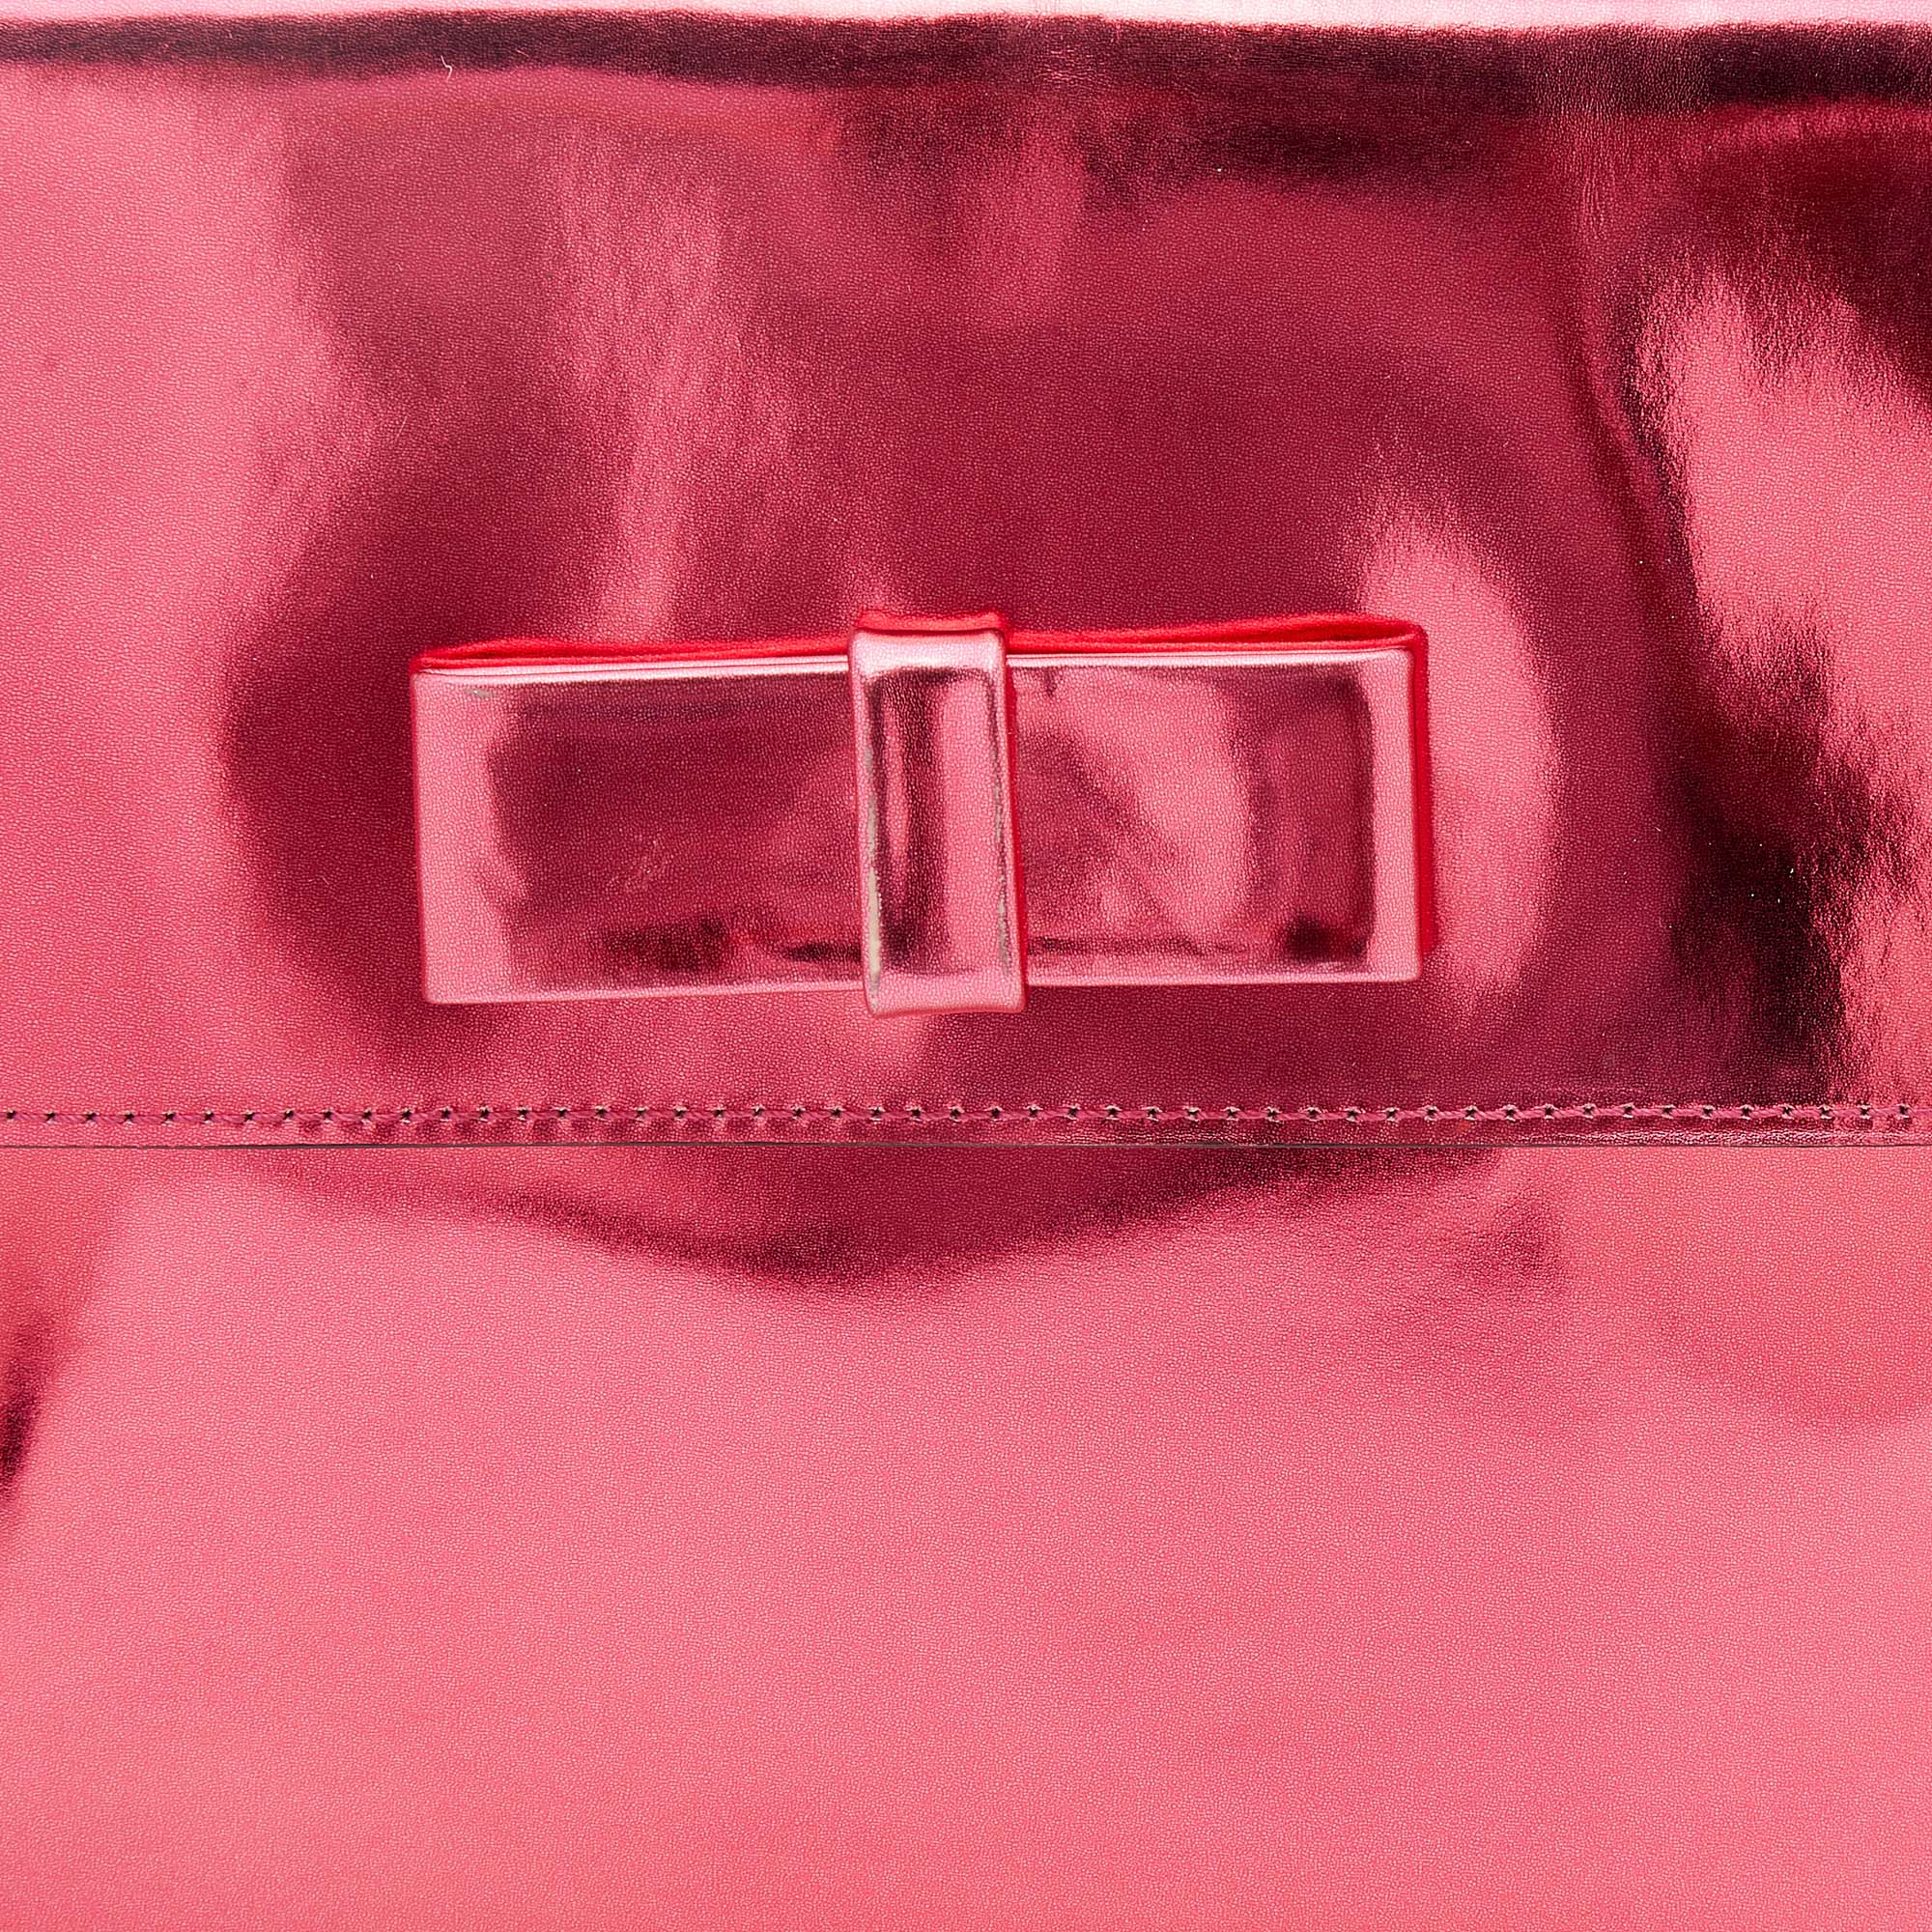 Marni Metallic Pink Patent Leather Bow Clutch